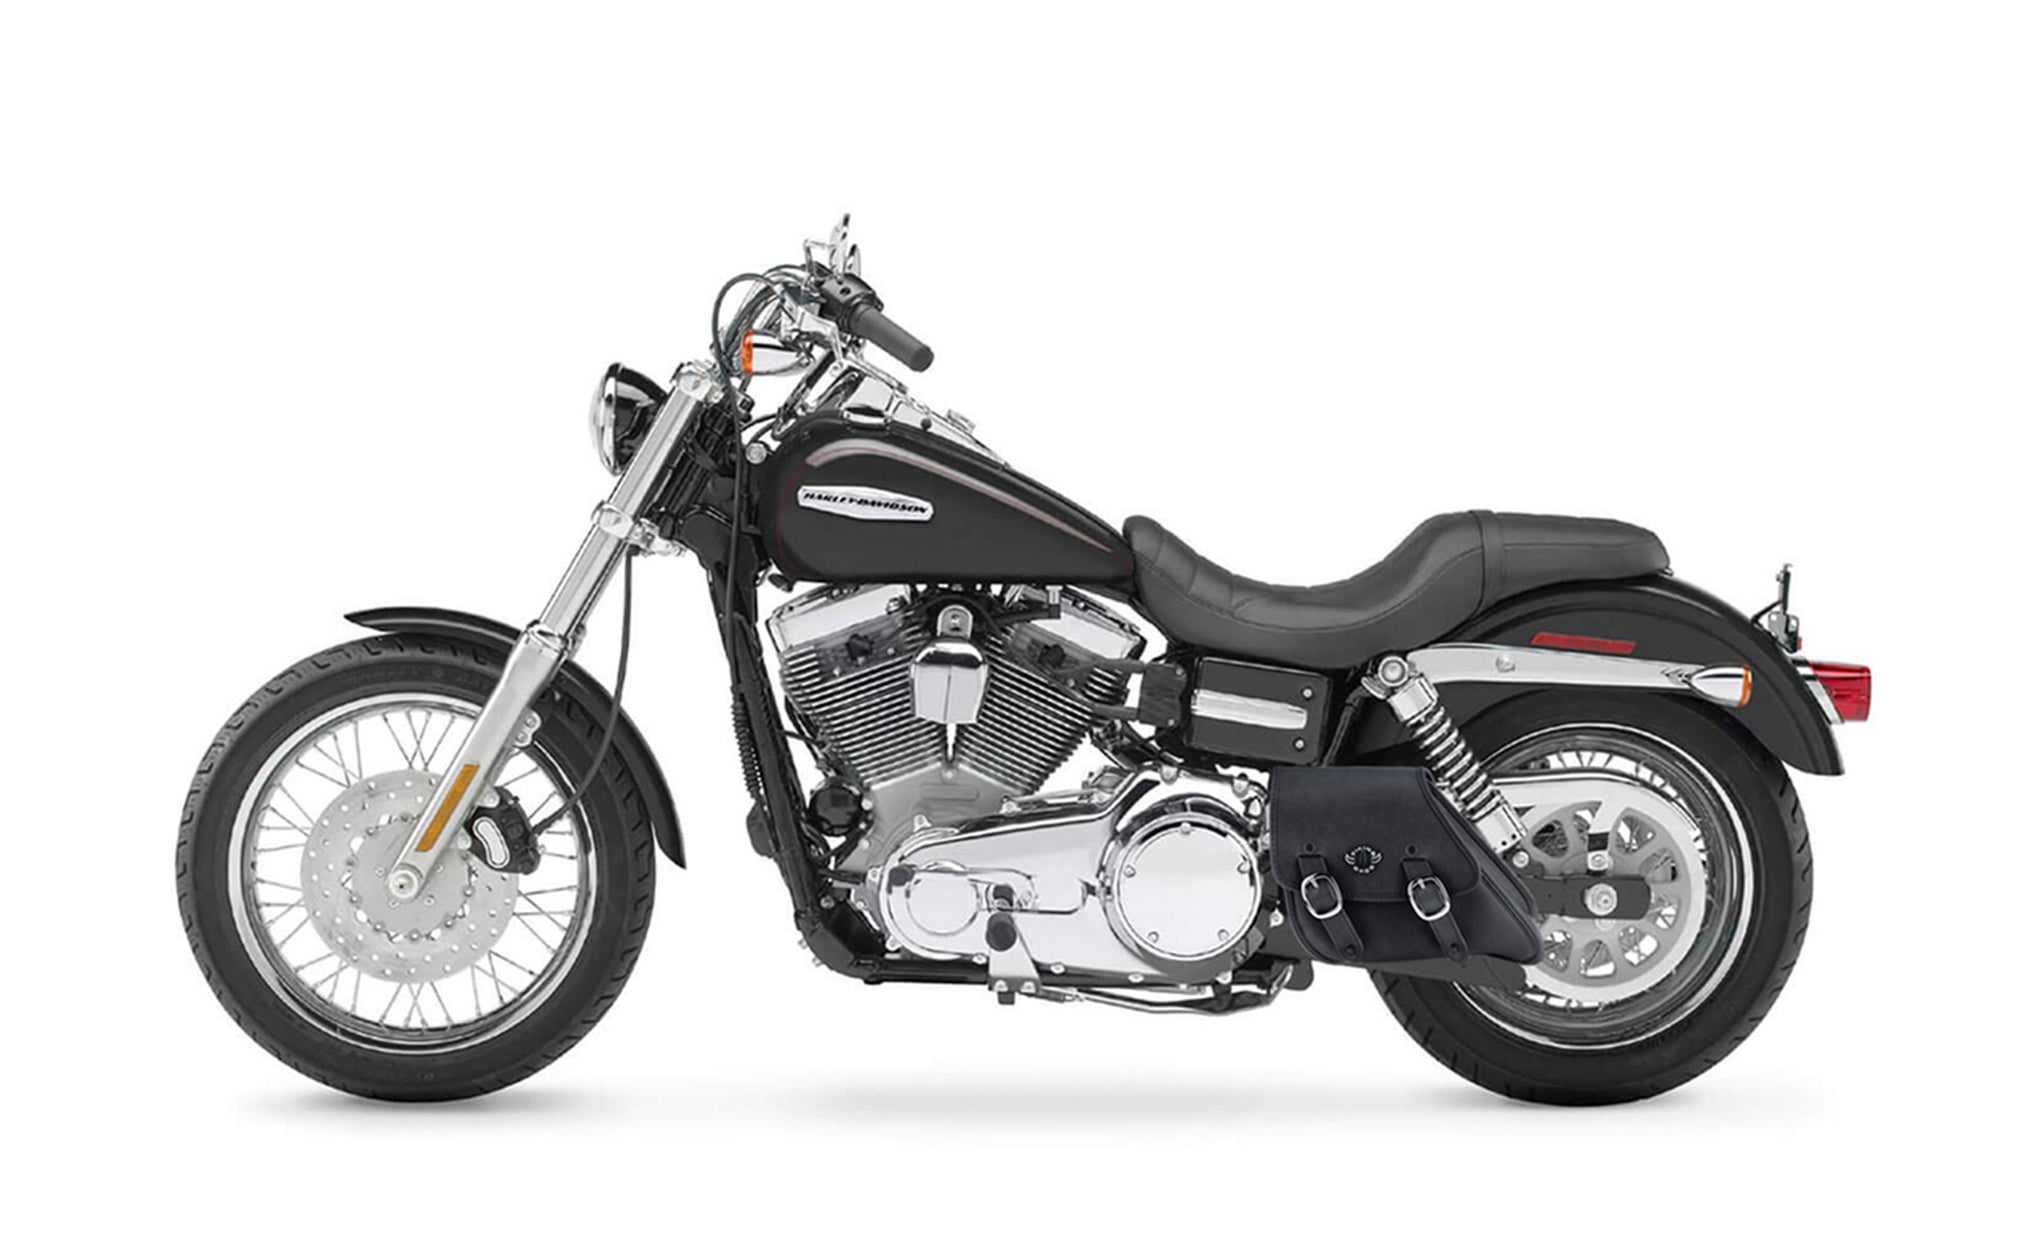 Viking Knapsack Harley Dyna Motorcycle Swing Arm Bag Bag on Bike View @expand